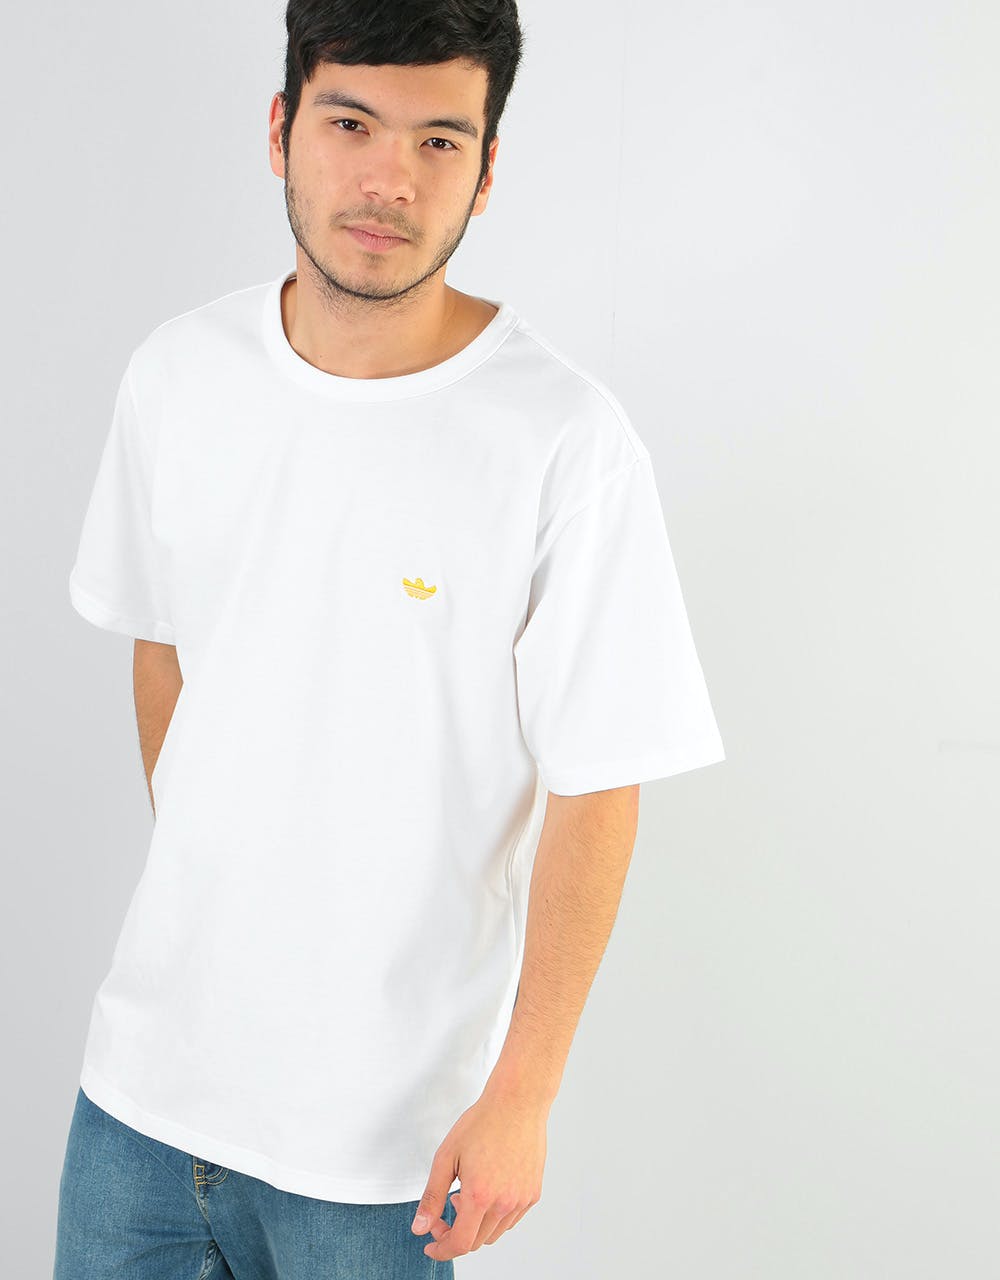 Adidas Mini Shmoo T-Shirt - White/Active Gold